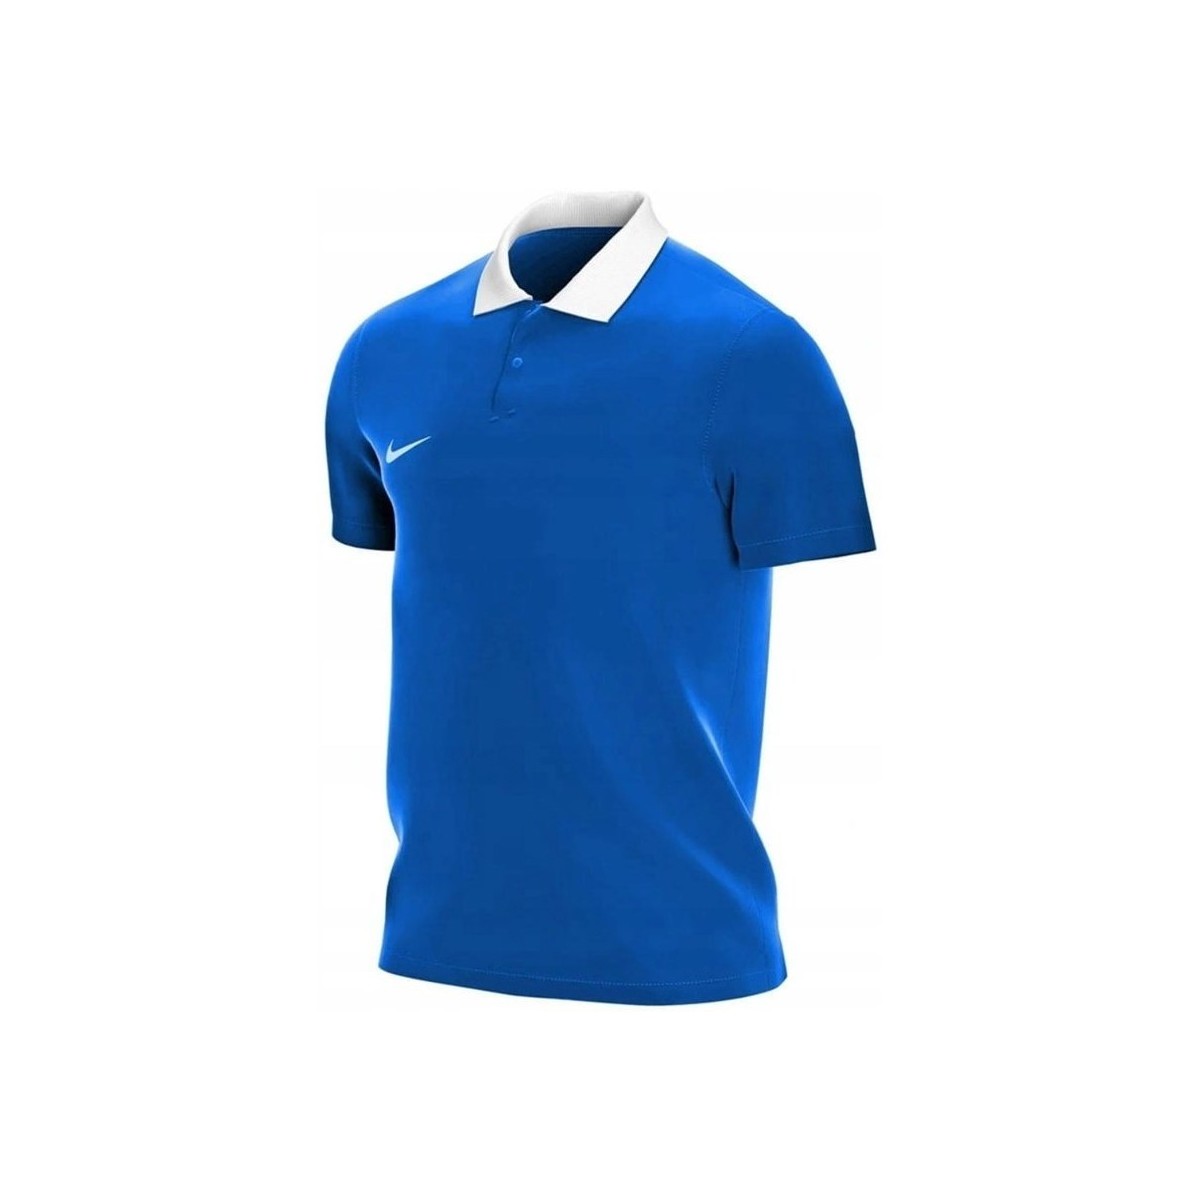 textil Herr T-shirts Nike Drifit Park 20 Blå